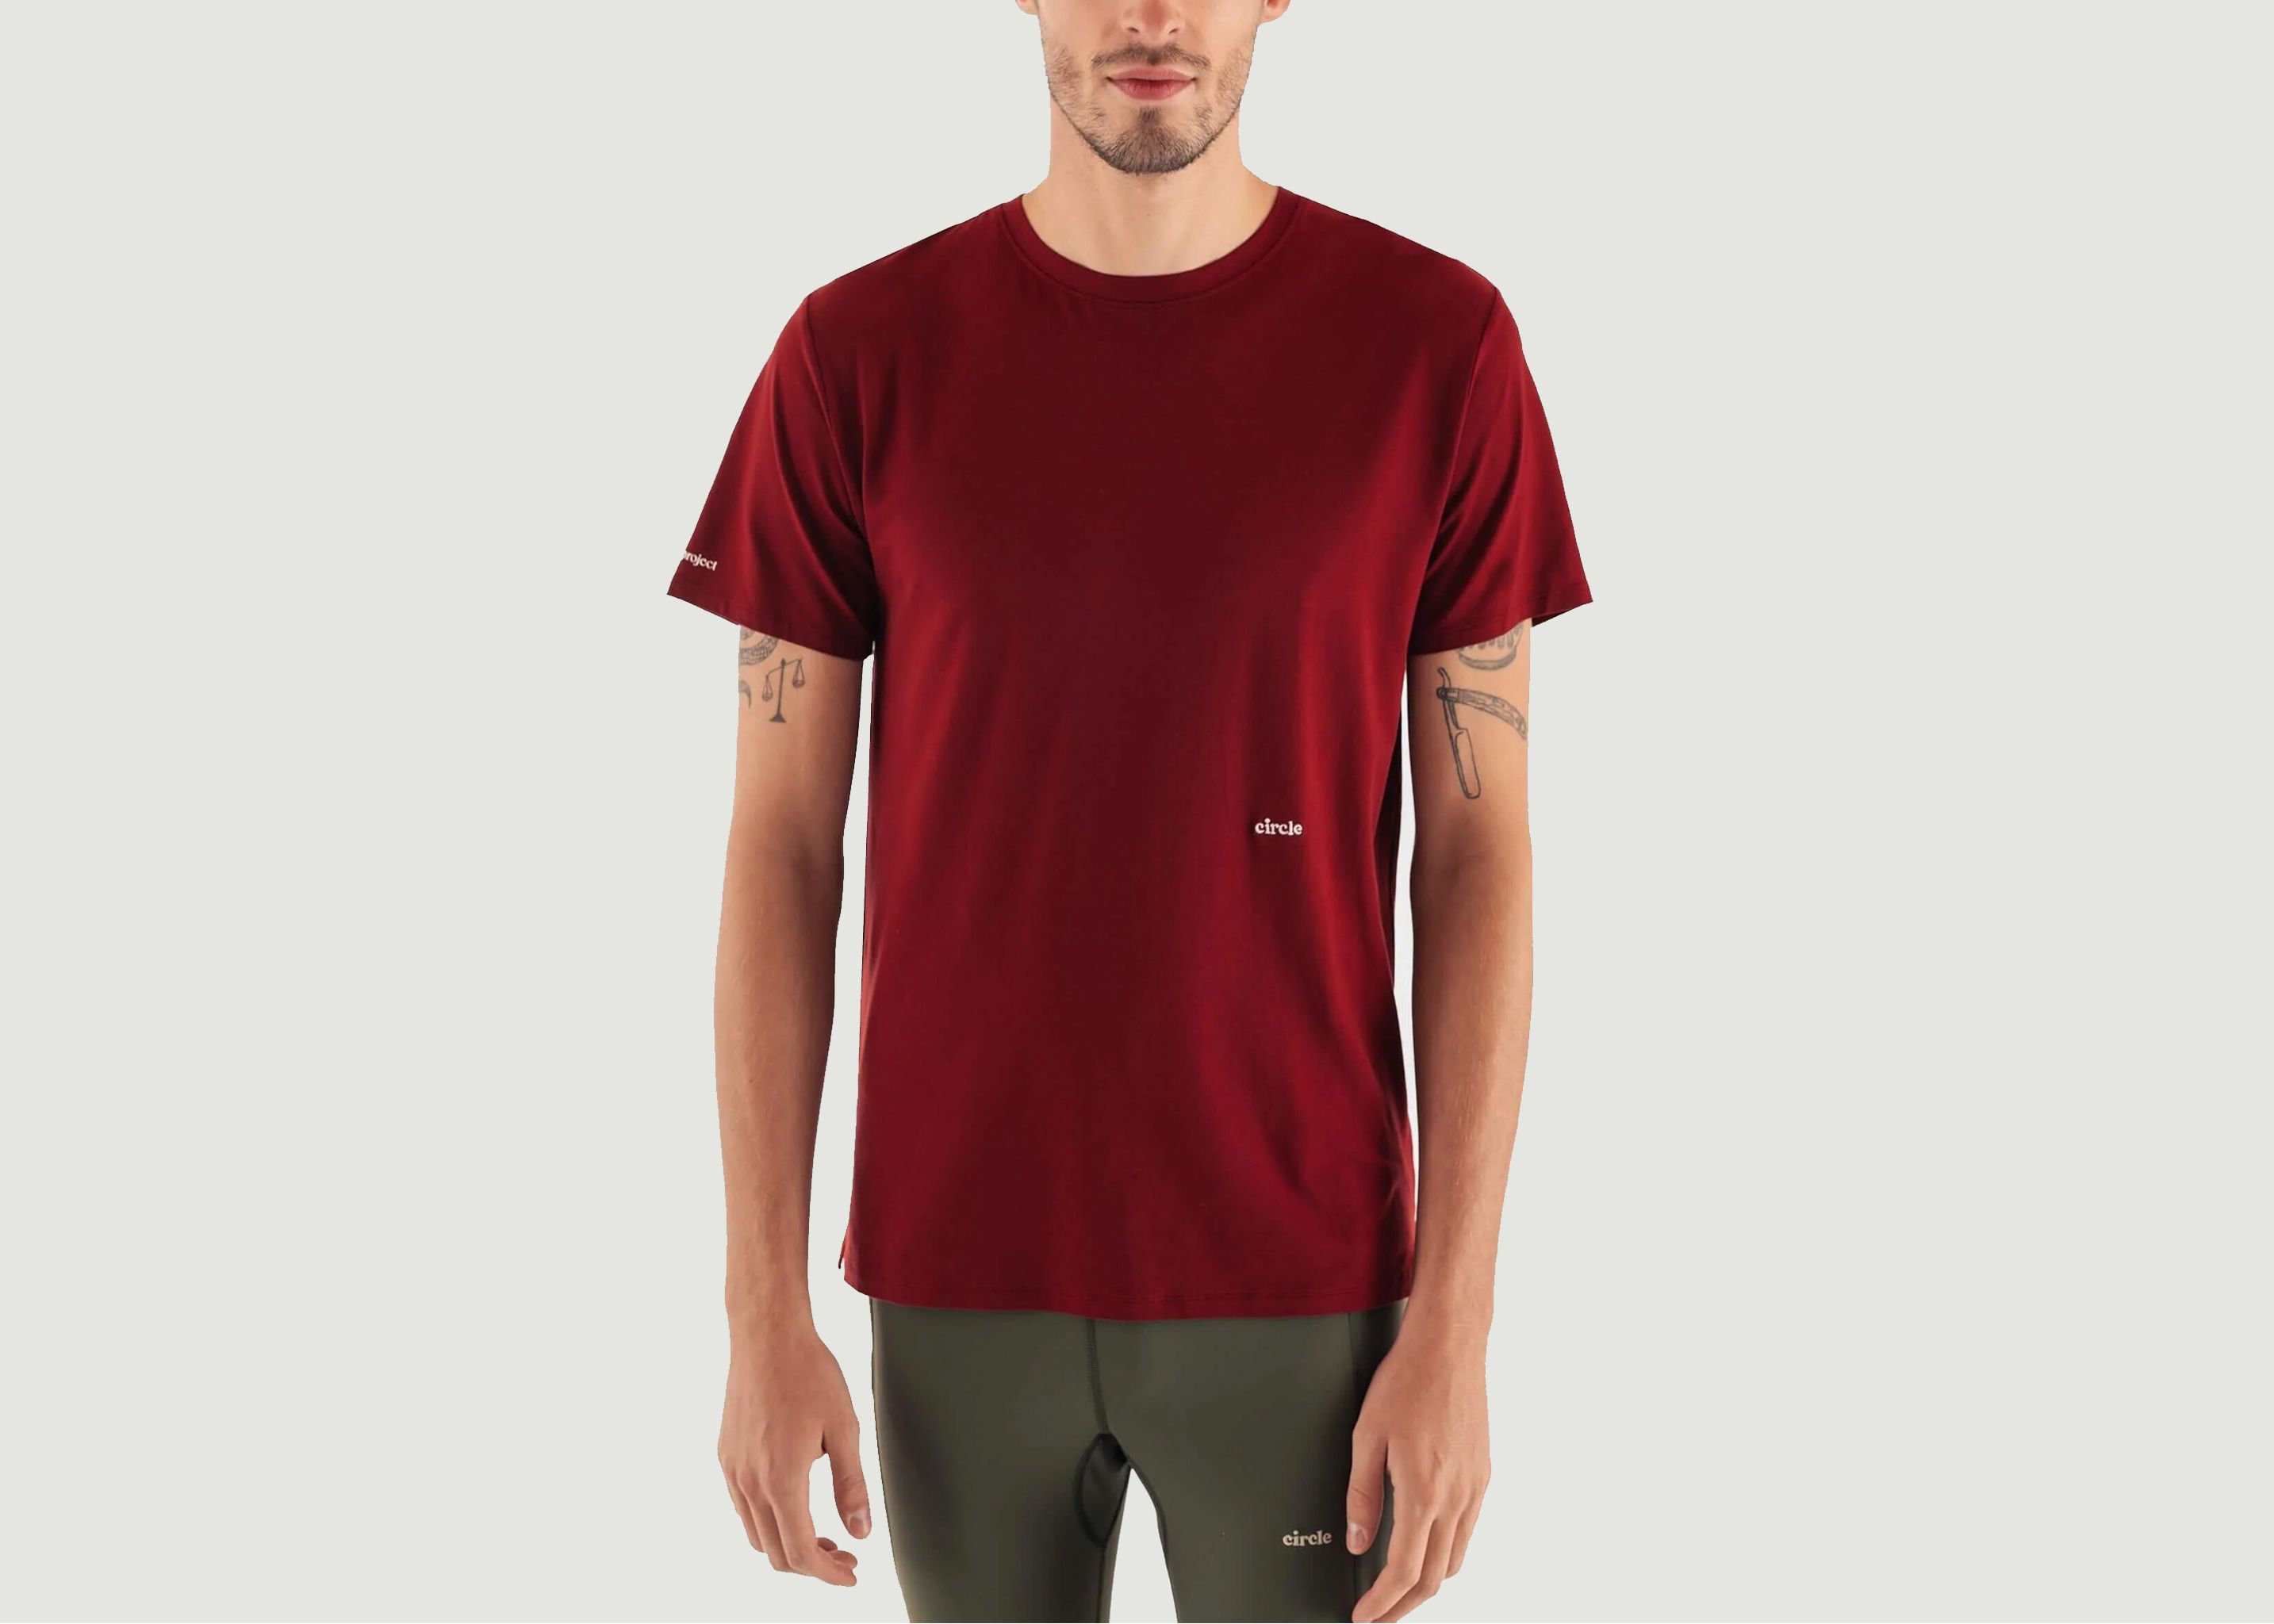 Teeshirt sport iconic - Circle Sportswear